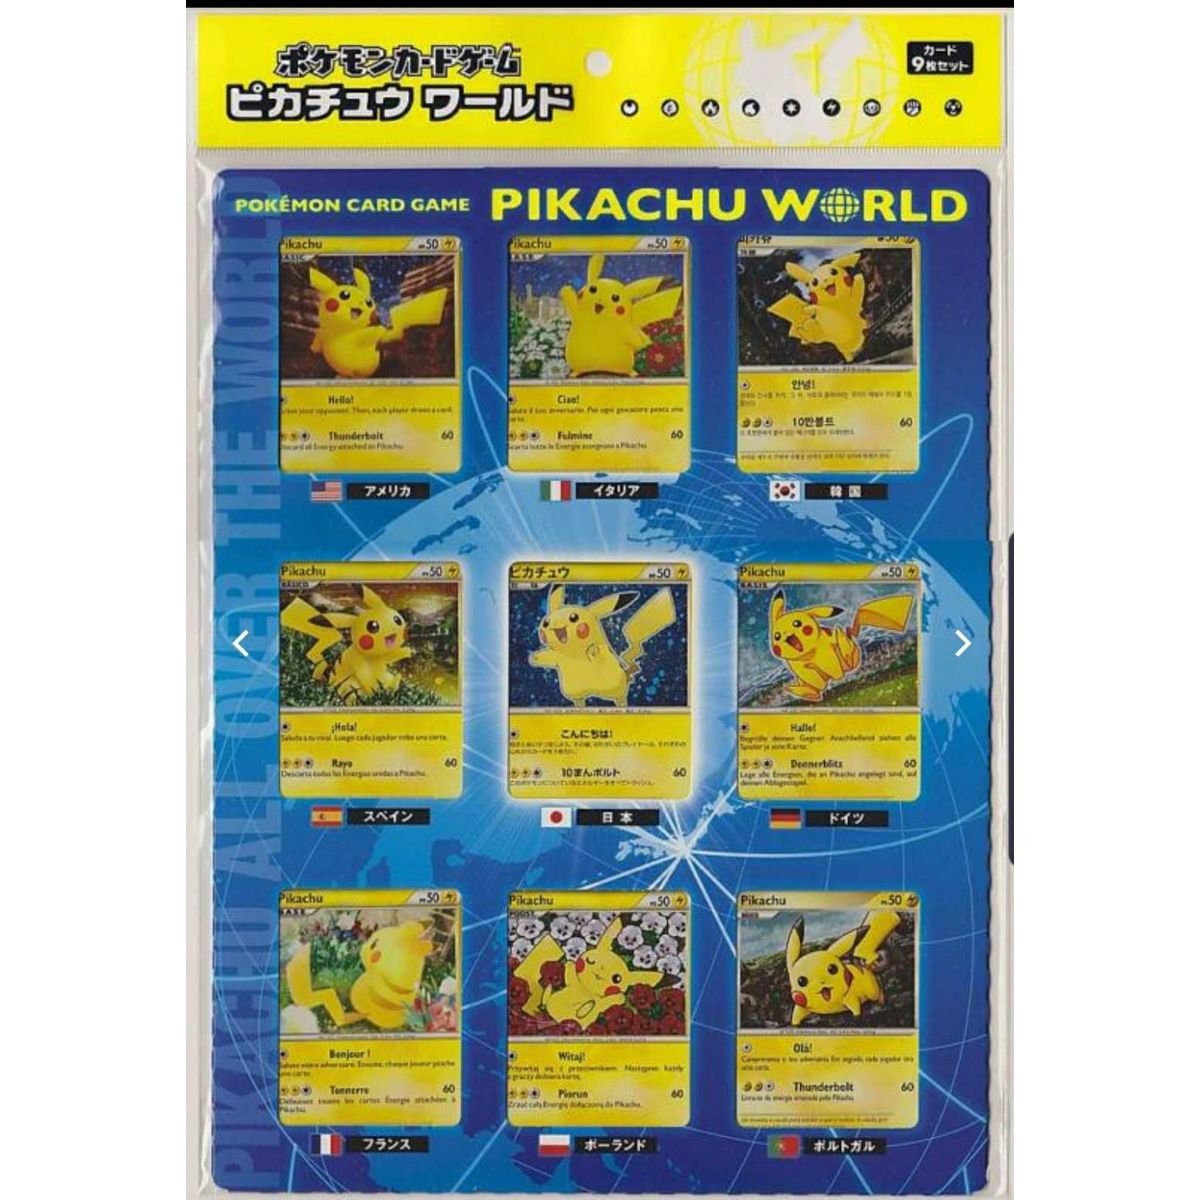 Pokémon - Box - Pikachu World Collection 2010 Edition 9 versiegelt